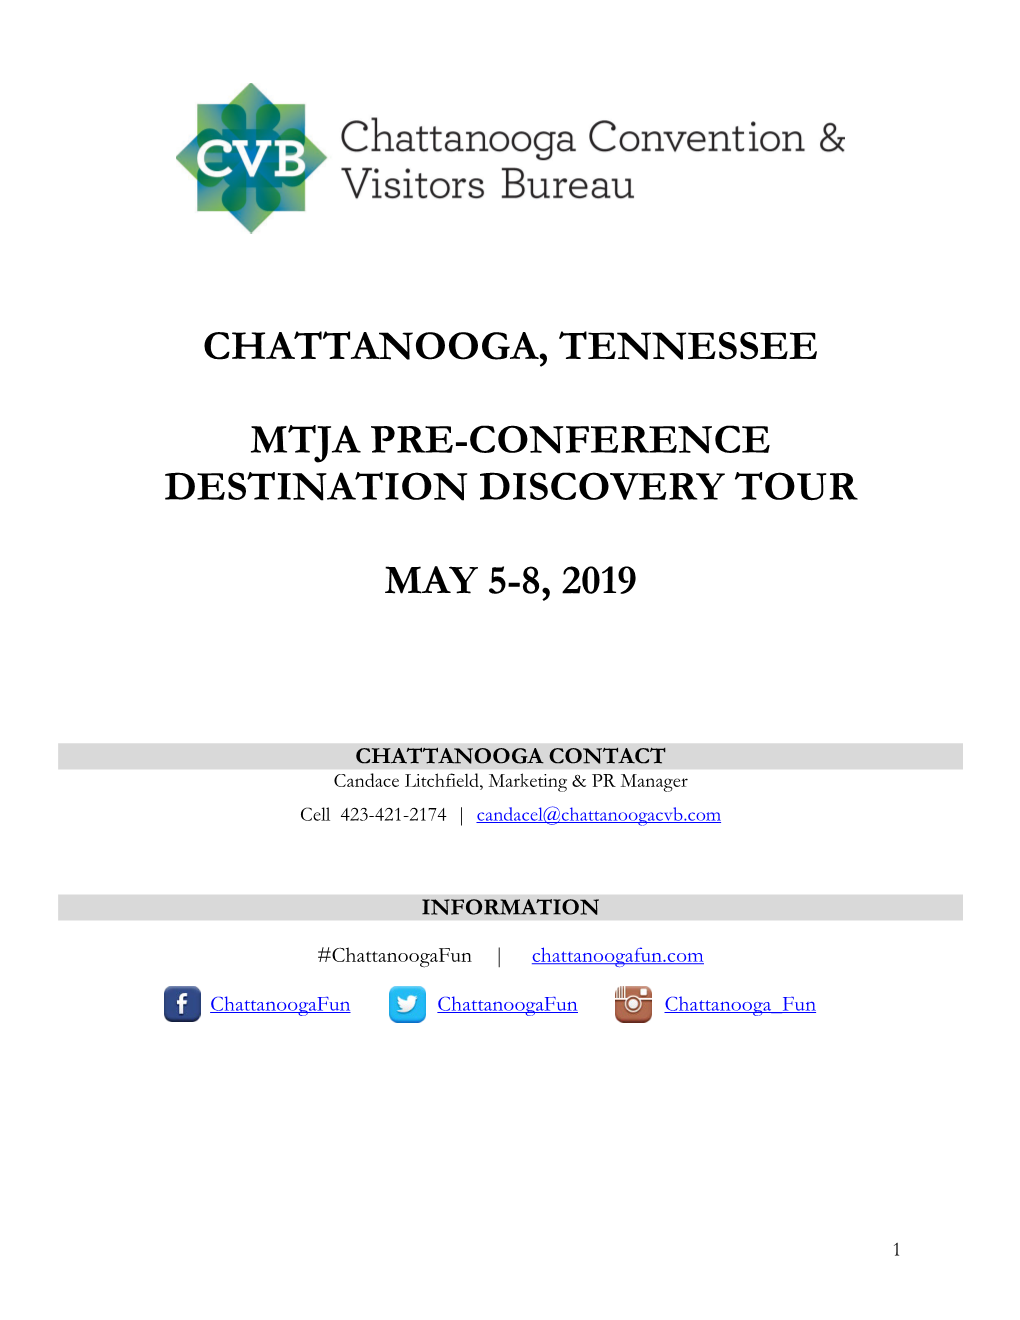 Chattanooga-FINAL-Itinerary.Pdf